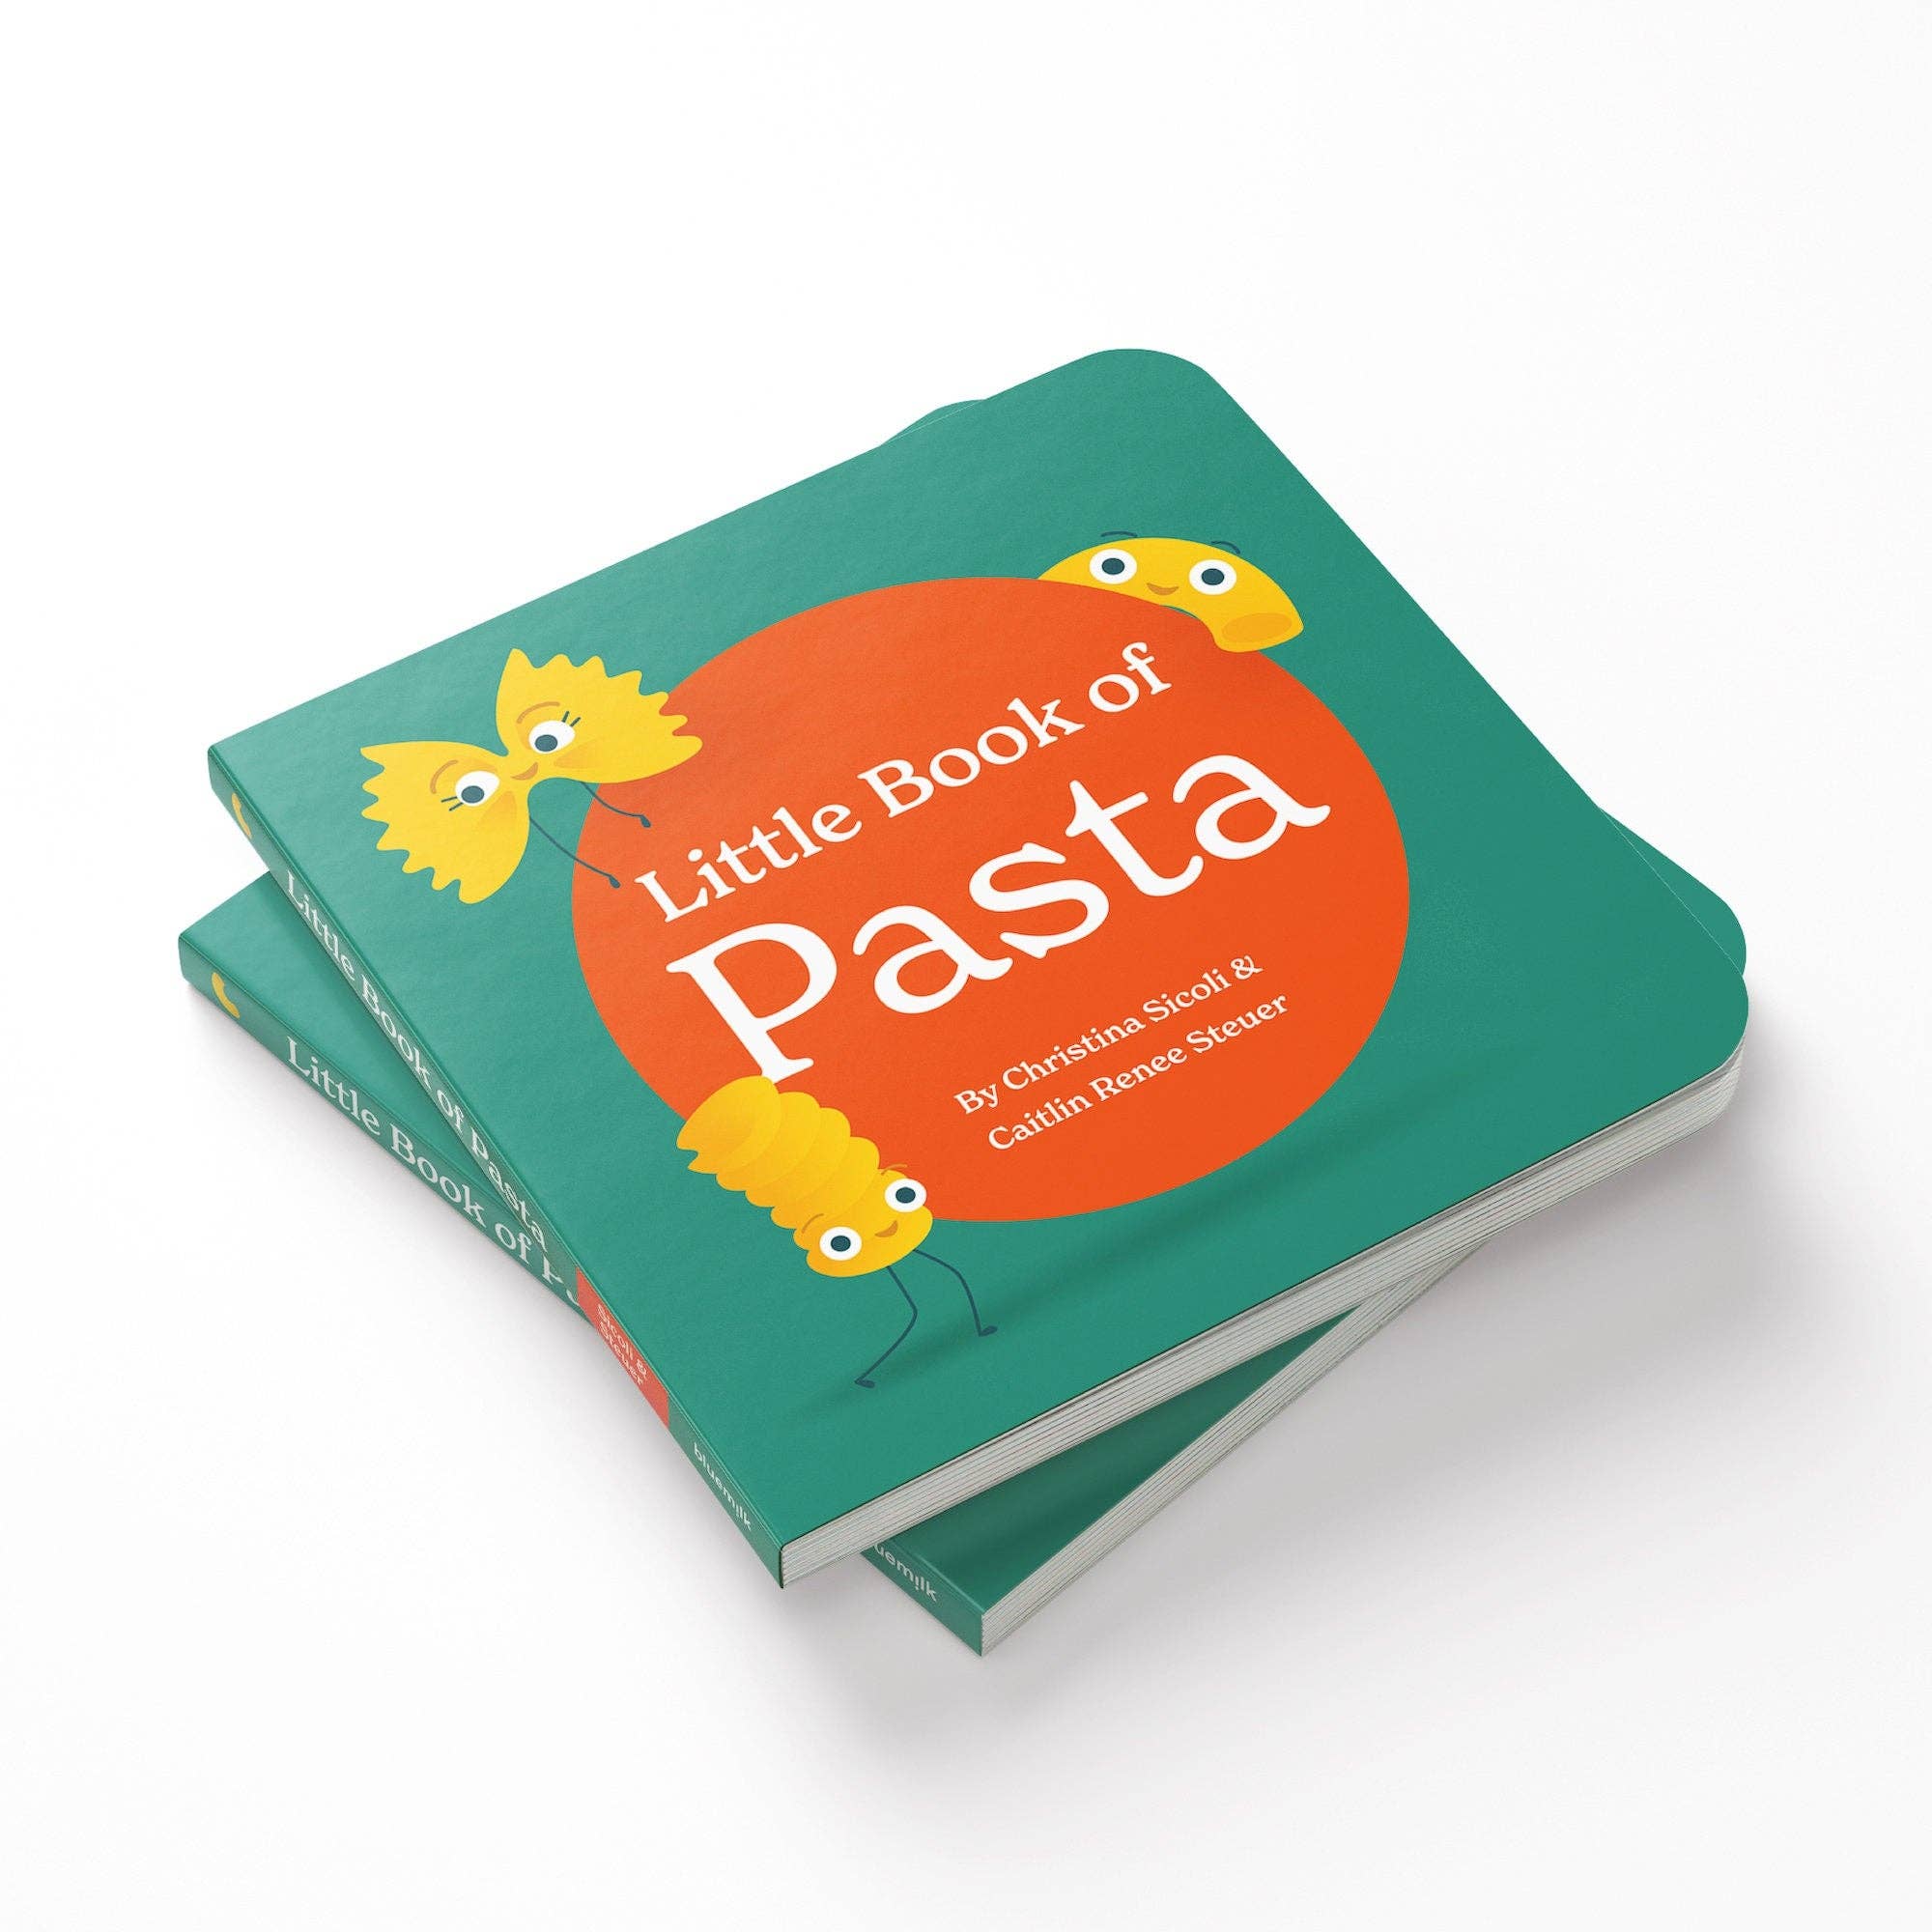 Little Book of Pasta - Sicoli, Christina & Steuer, Caitlin Renee